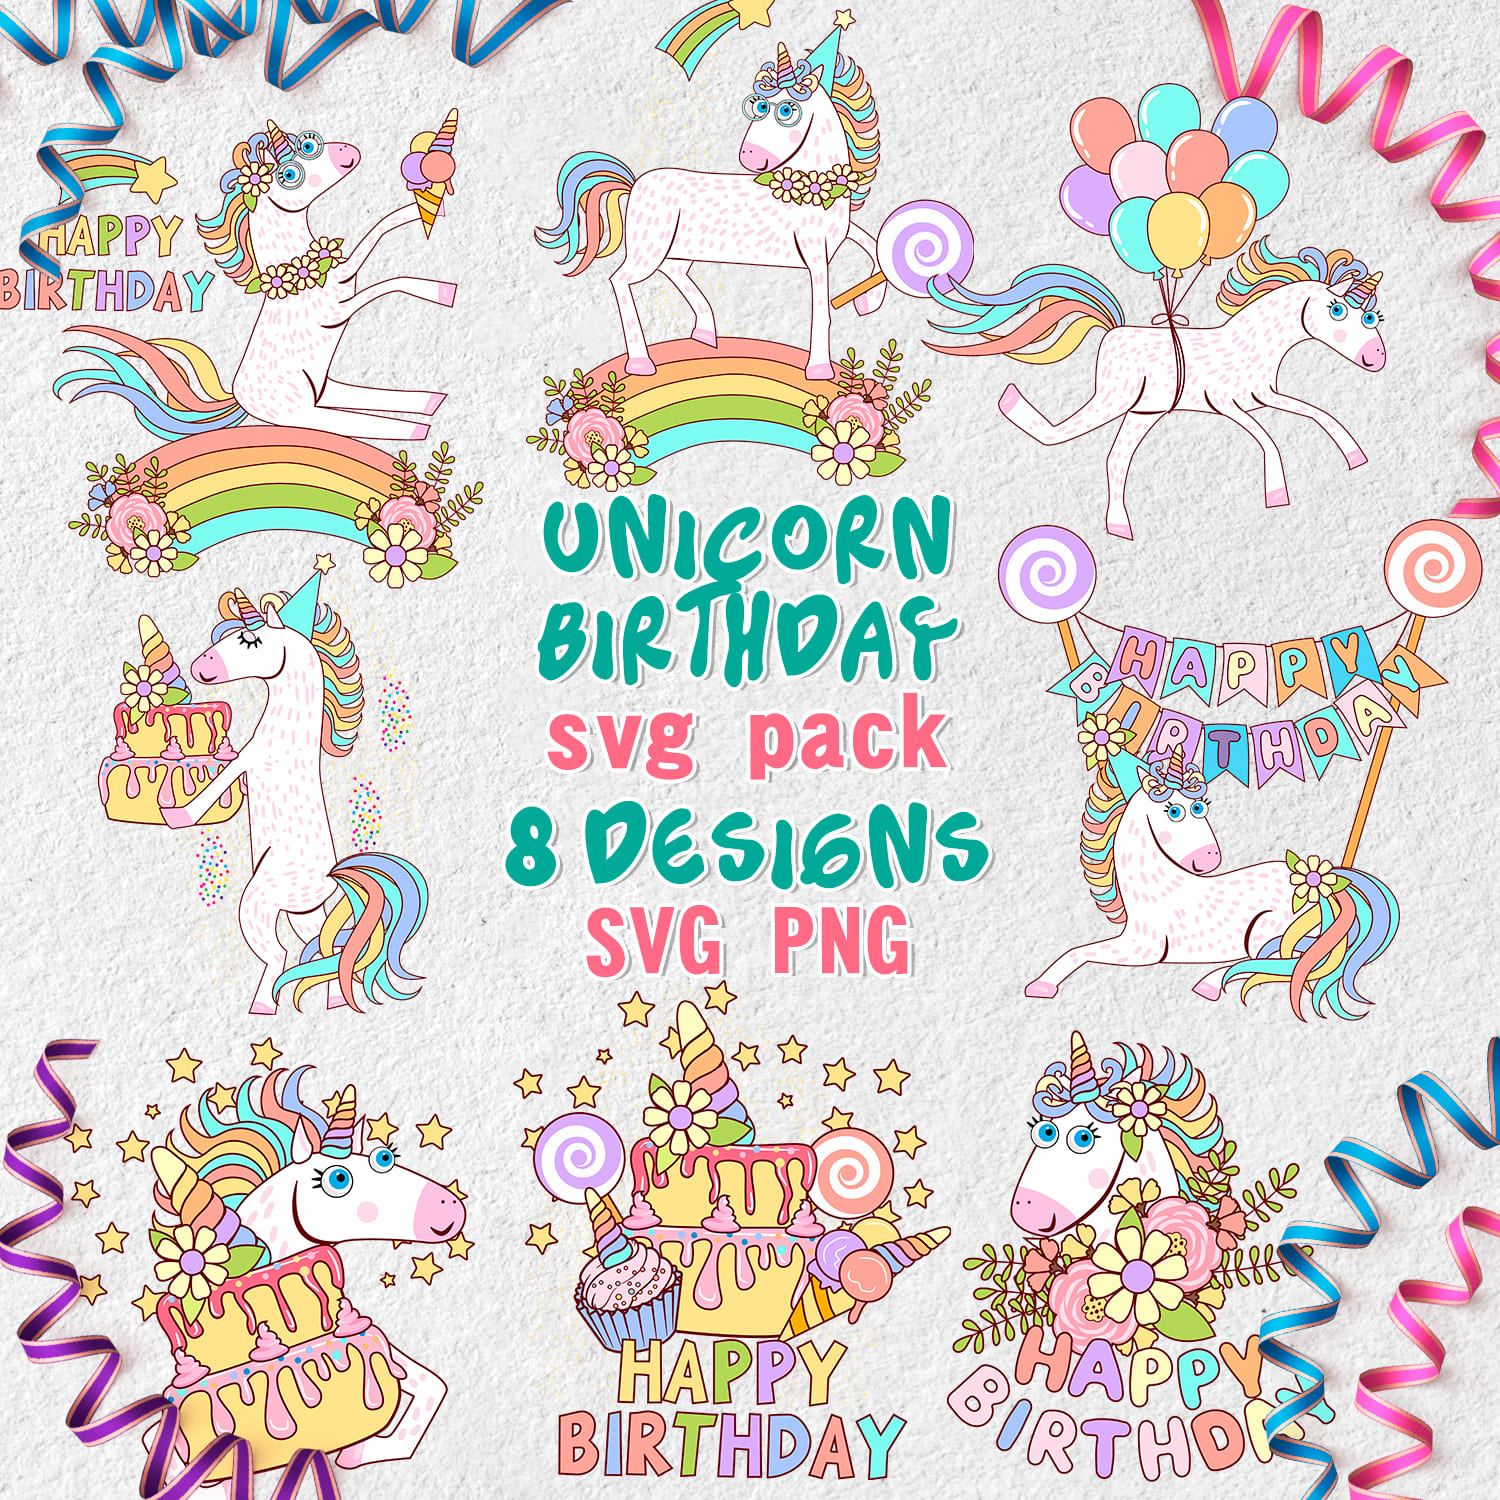 Unicorn Birthday SVG - main image preview.